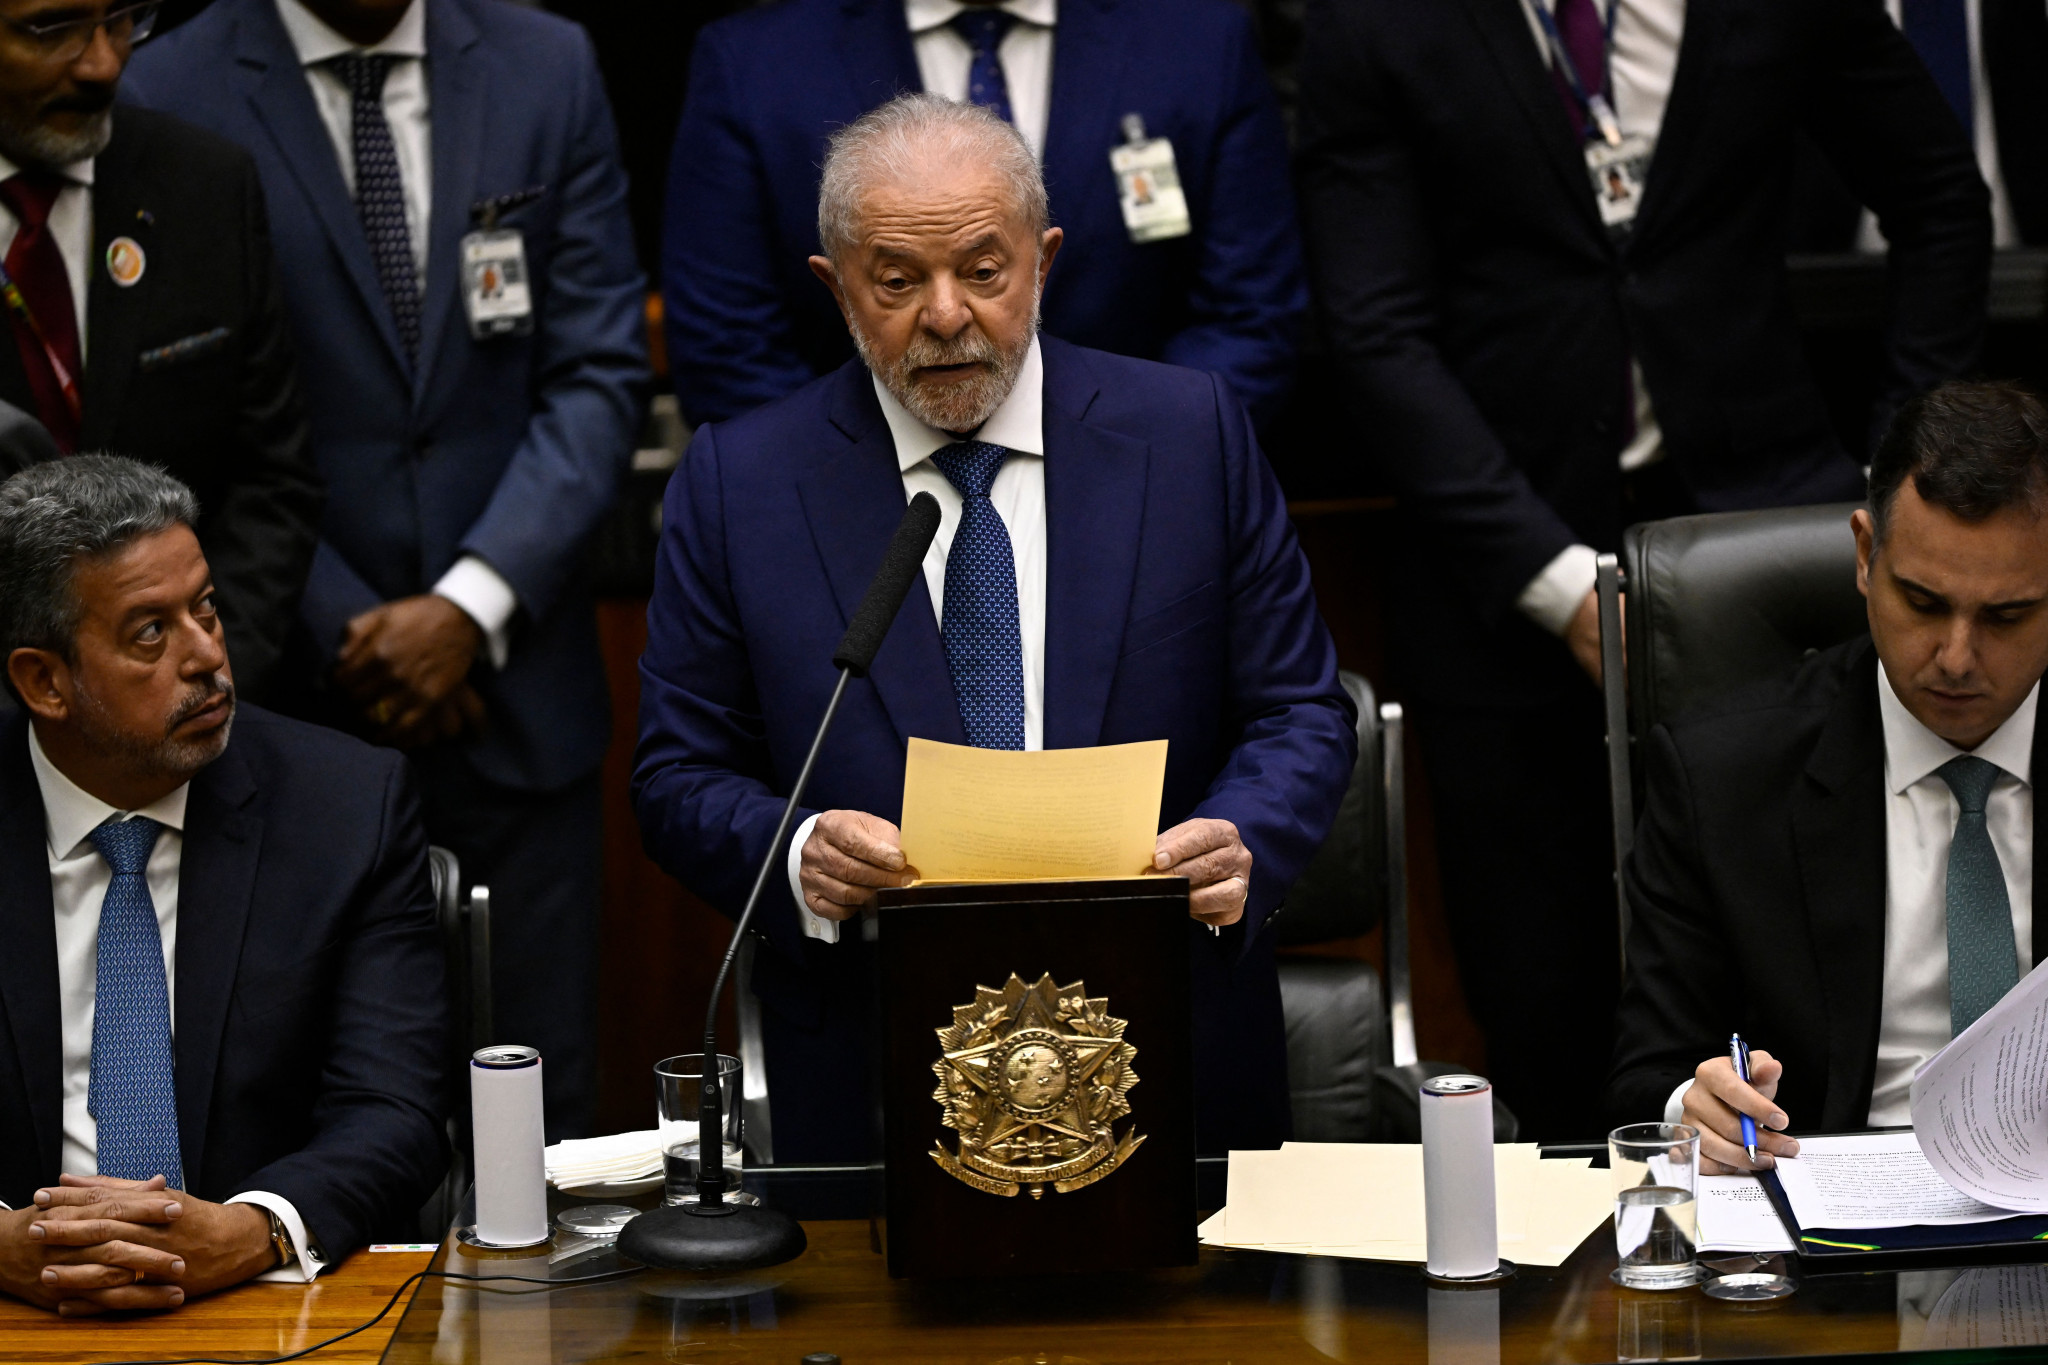 Luiz Inácio Lula da Silva has been sworn in as the new President of Brazil ©Getty Images